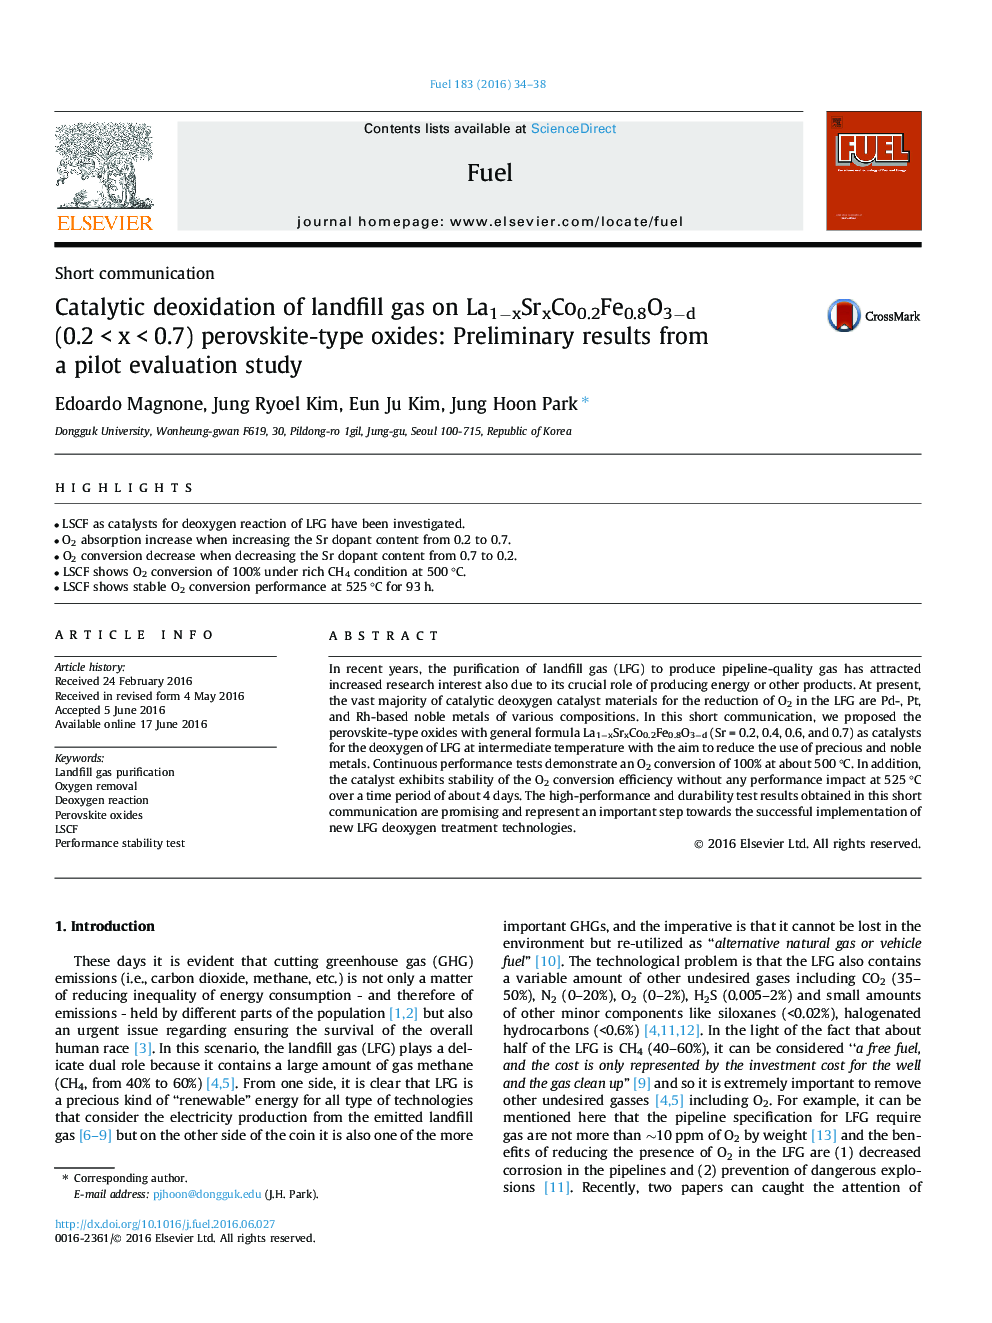 Catalytic deoxidation of landfill gas on La1âxSrxCo0.2Fe0.8O3âd (0.2Â <Â xÂ <Â 0.7) perovskite-type oxides: Preliminary results from a pilot evaluation study